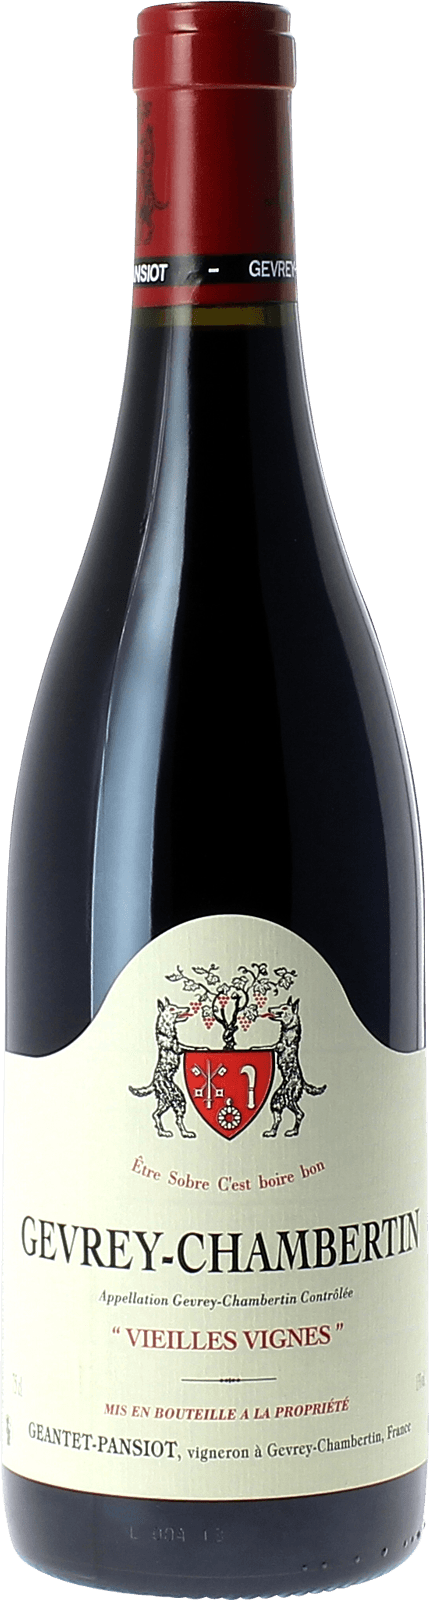 Gevrey chambertin vieilles vignes 2015 Domaine GEANTET PANSIOT, Bourgogne rouge